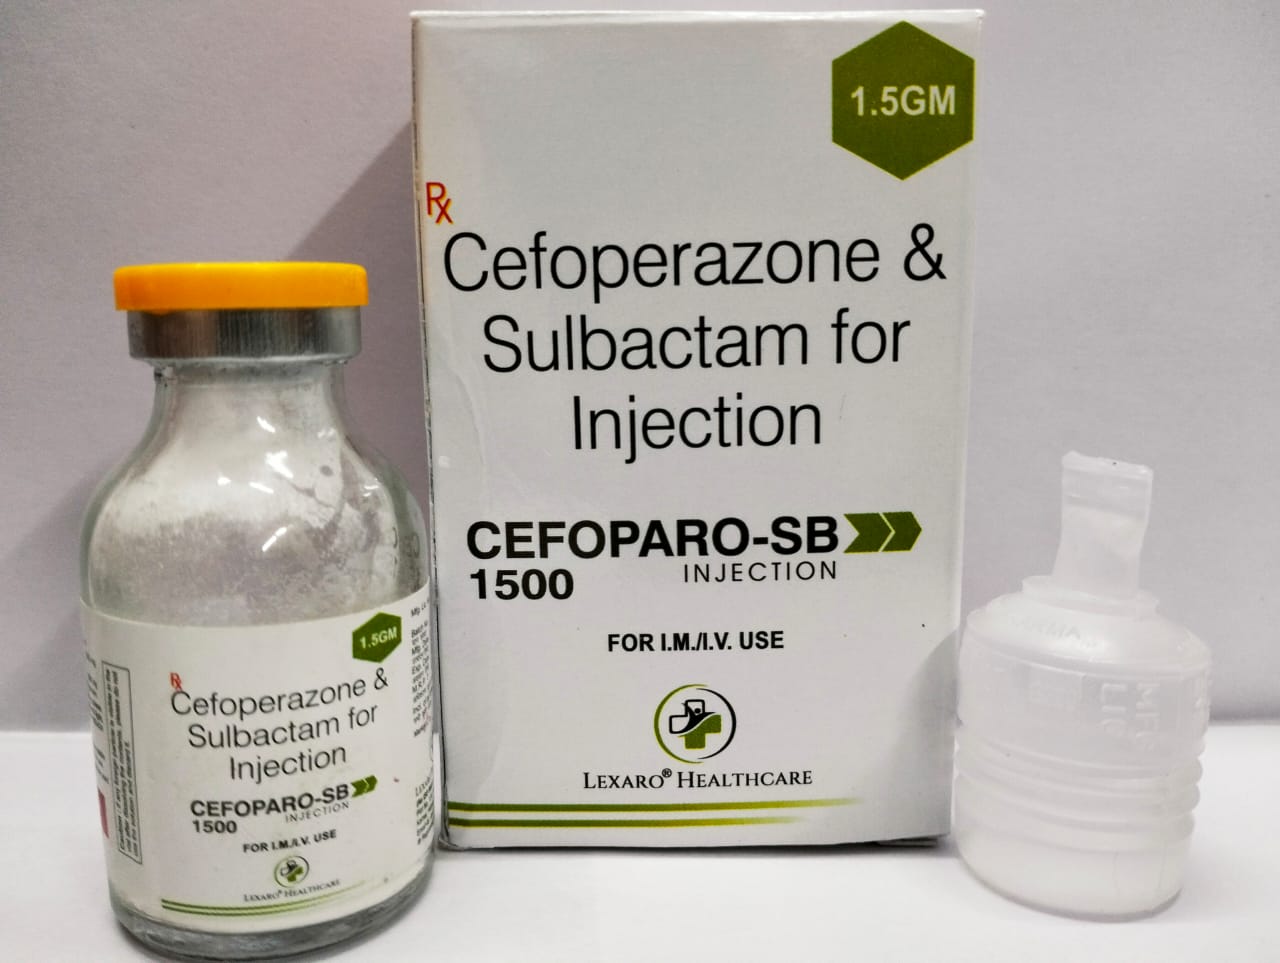 cefoperazone 1000mg + sulbactam
anhydrous 500mg